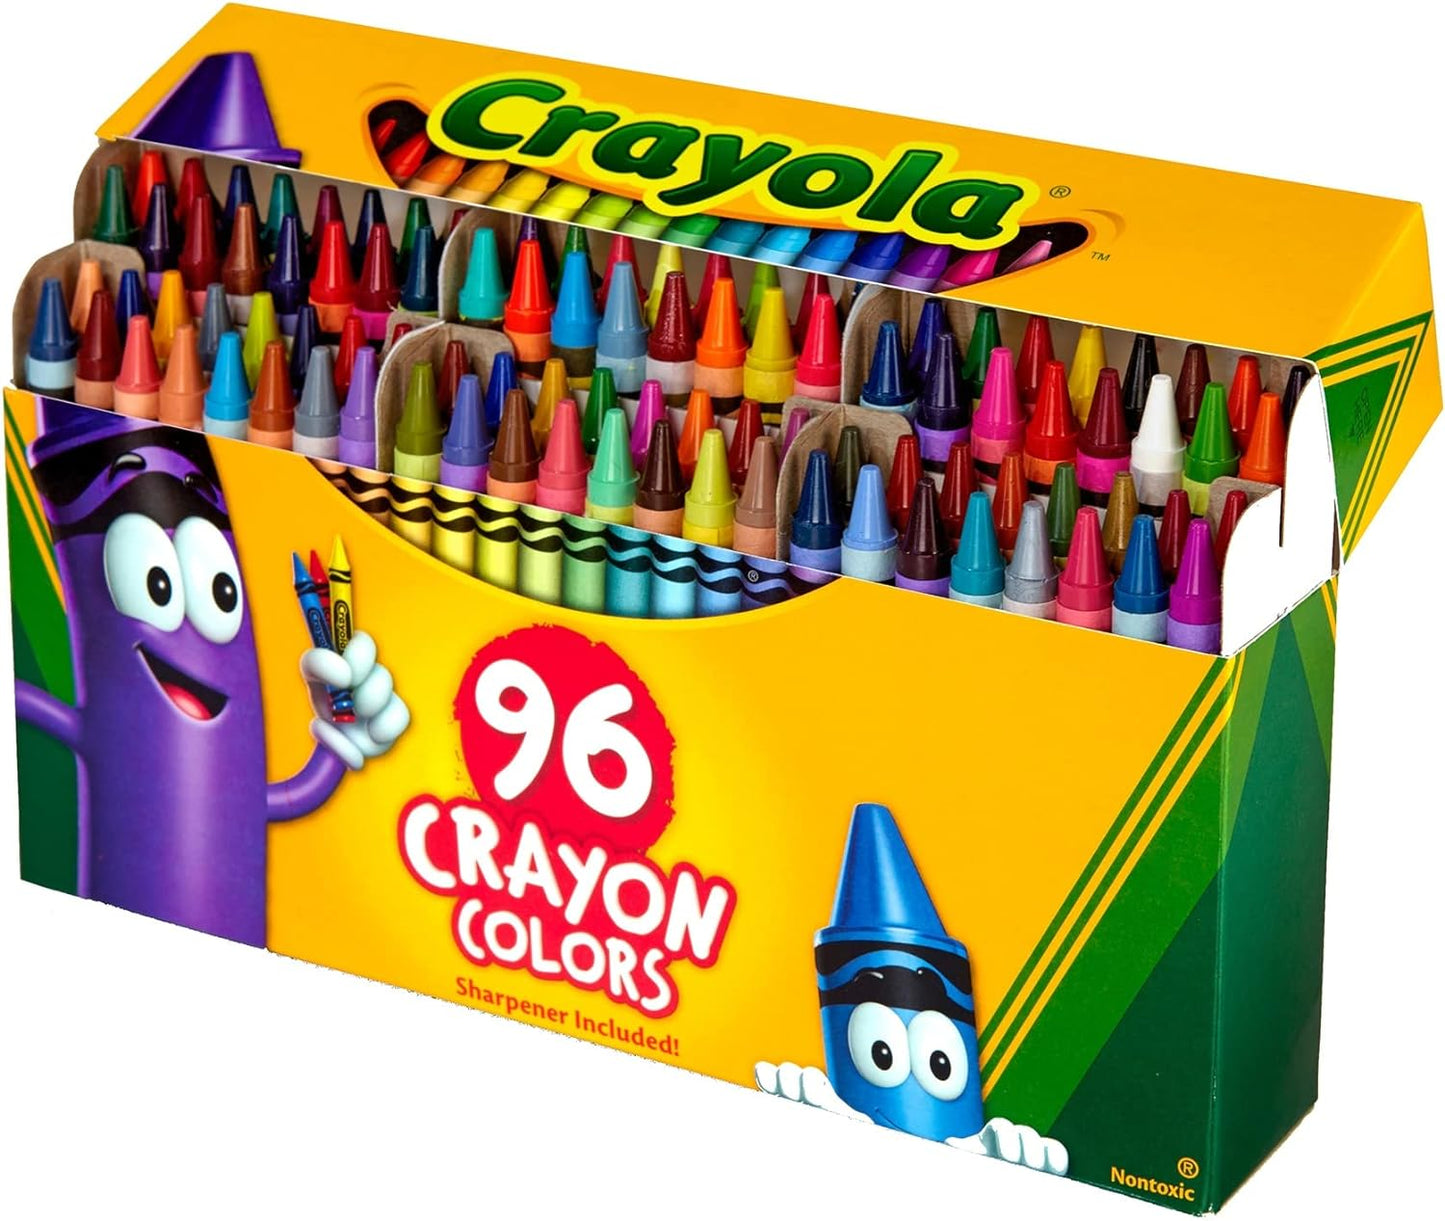 Crayola Crayons - Pack of 96